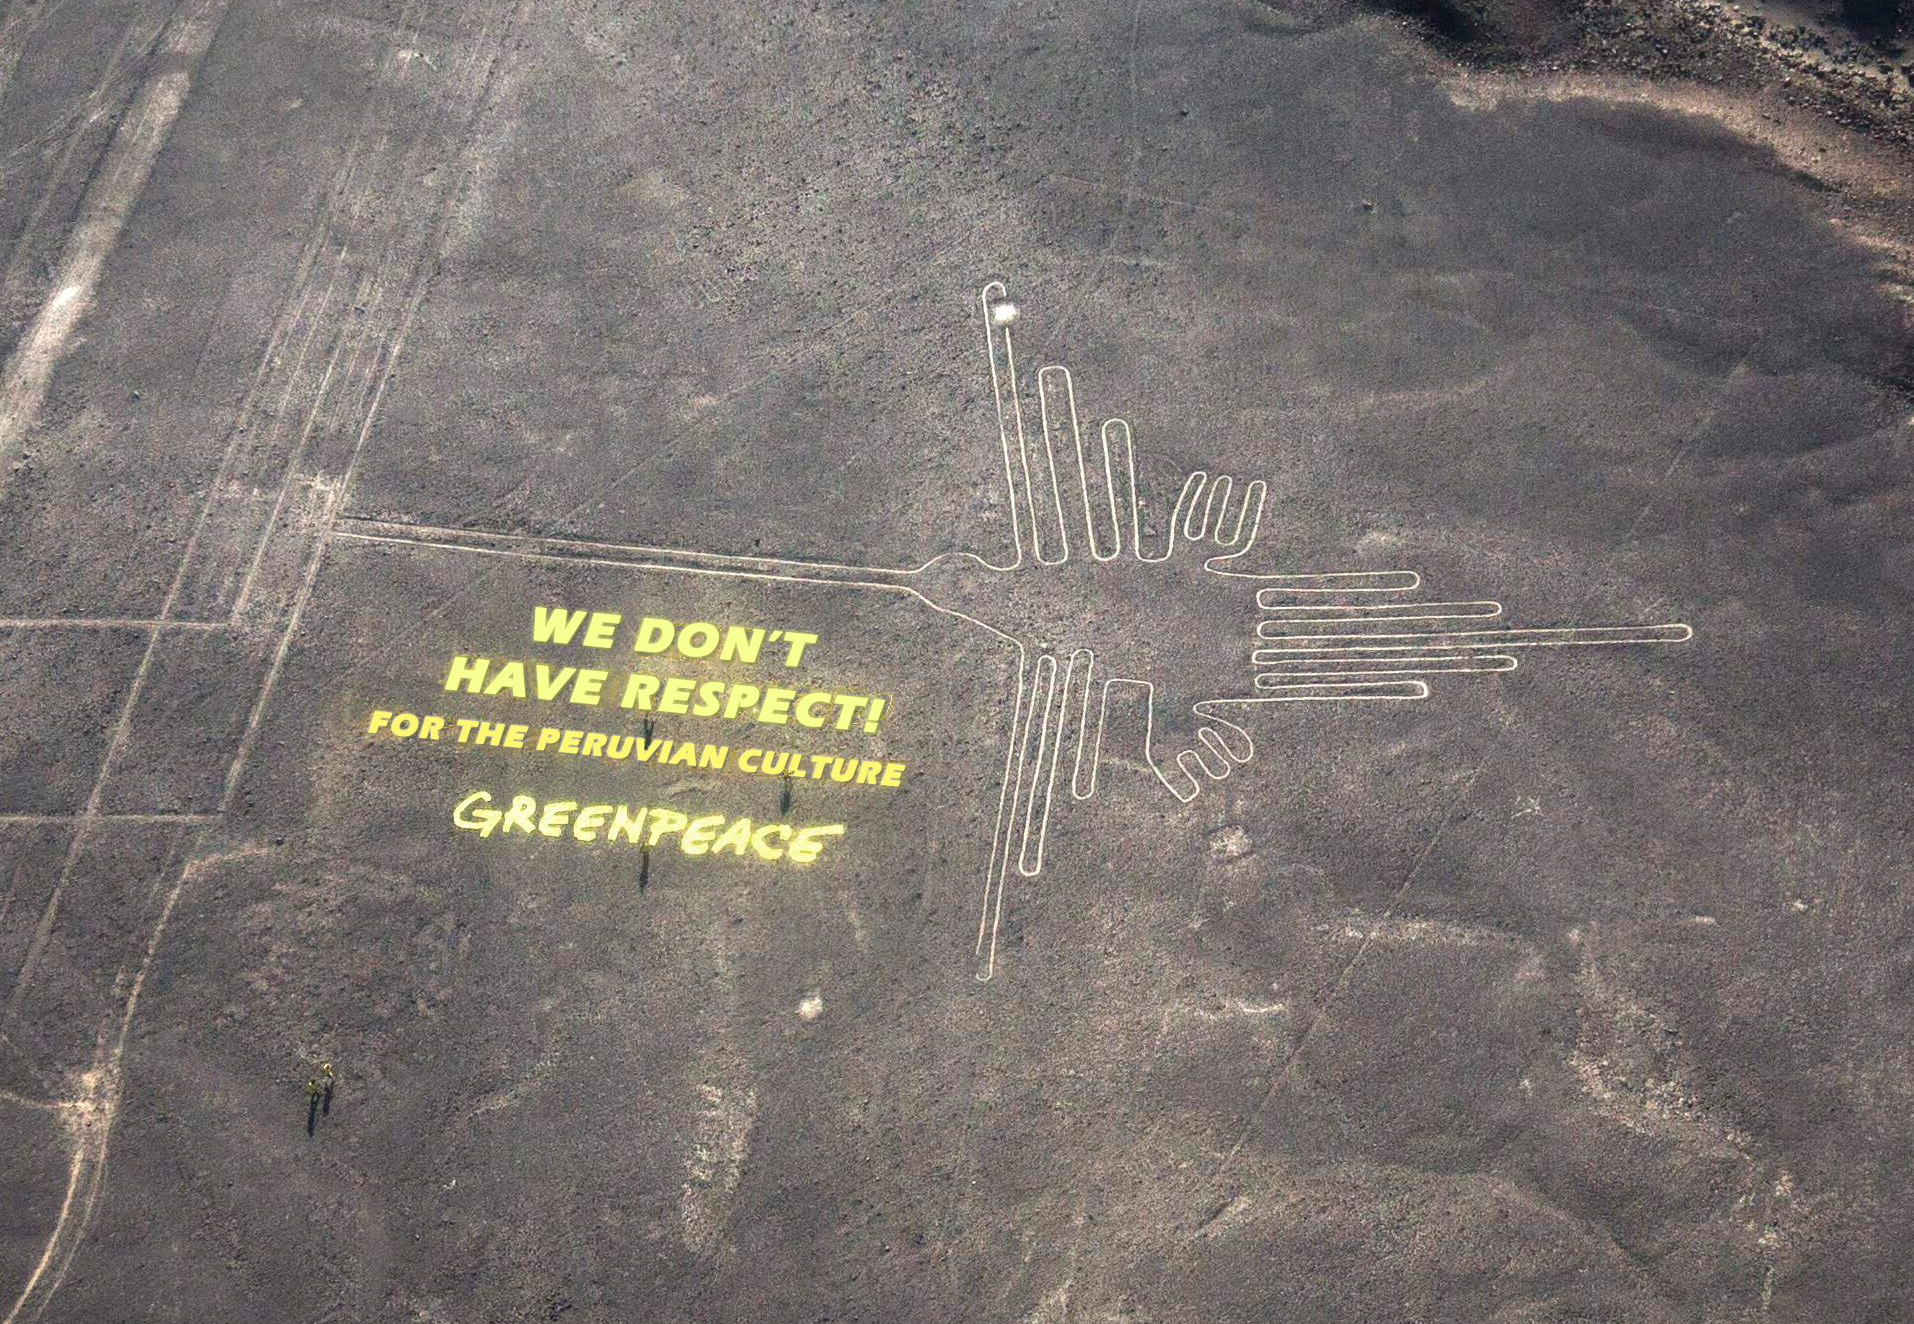 Nazca Lines, Hummingbird, Greenpeace